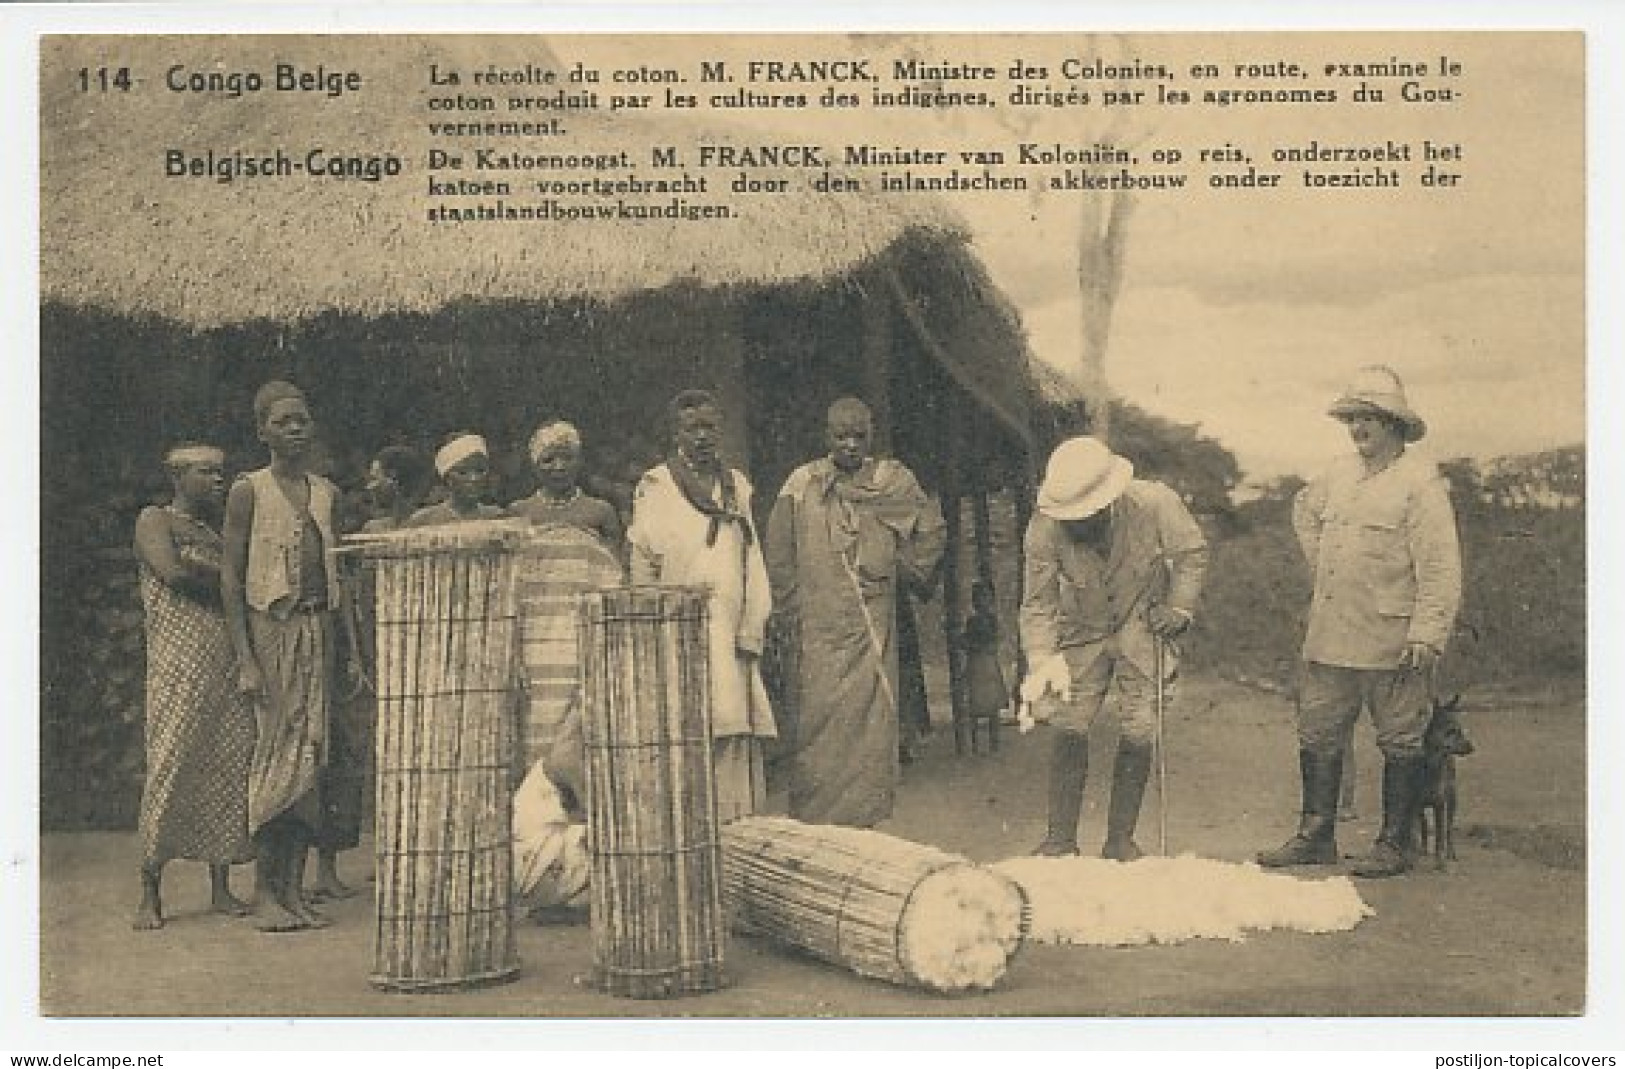 Postal Stationery Belgium Congo Cotton Harvest - Dog - Textile